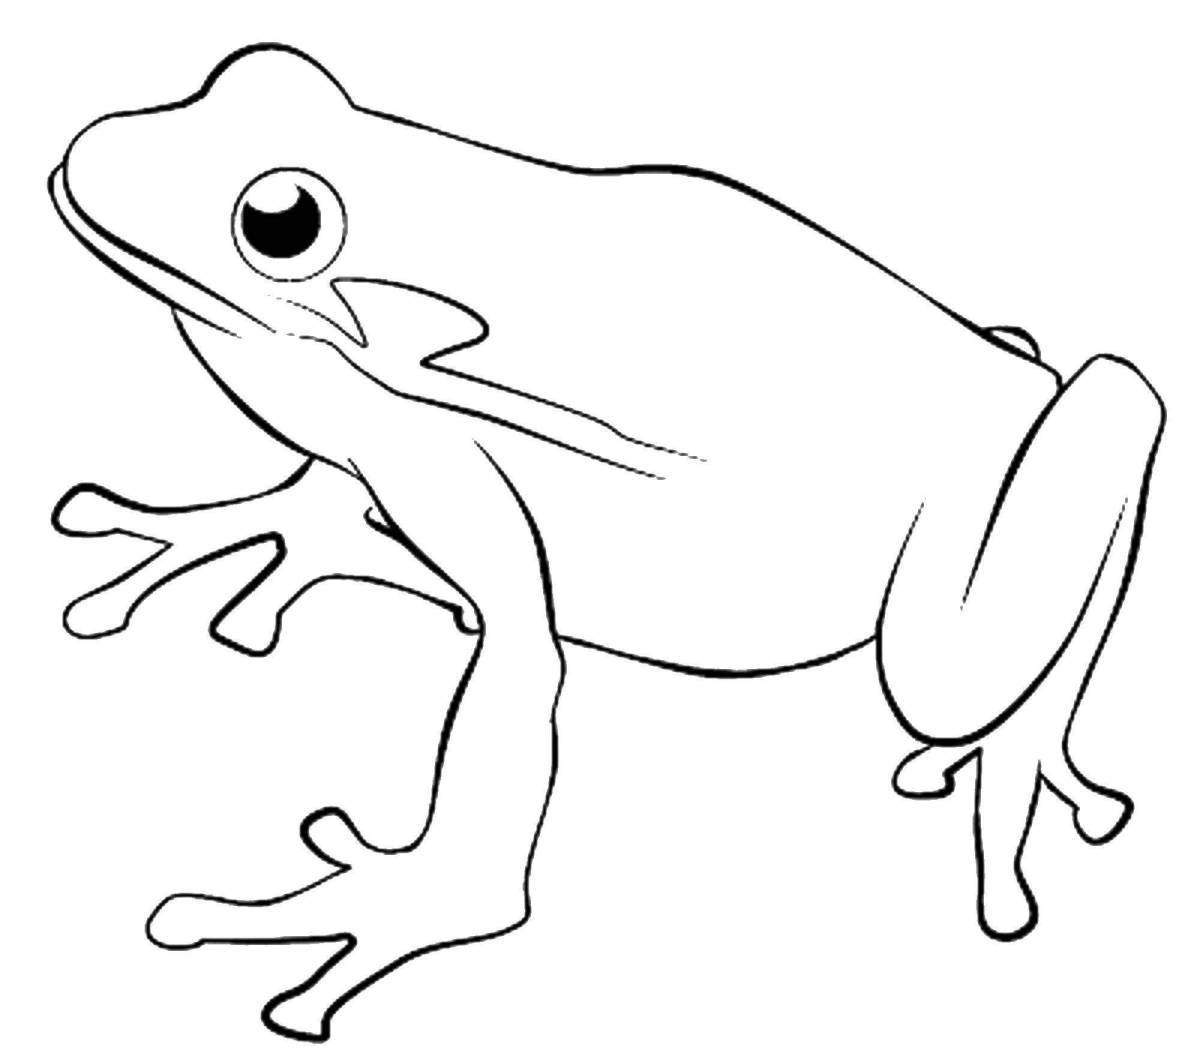 Frog for kids #2